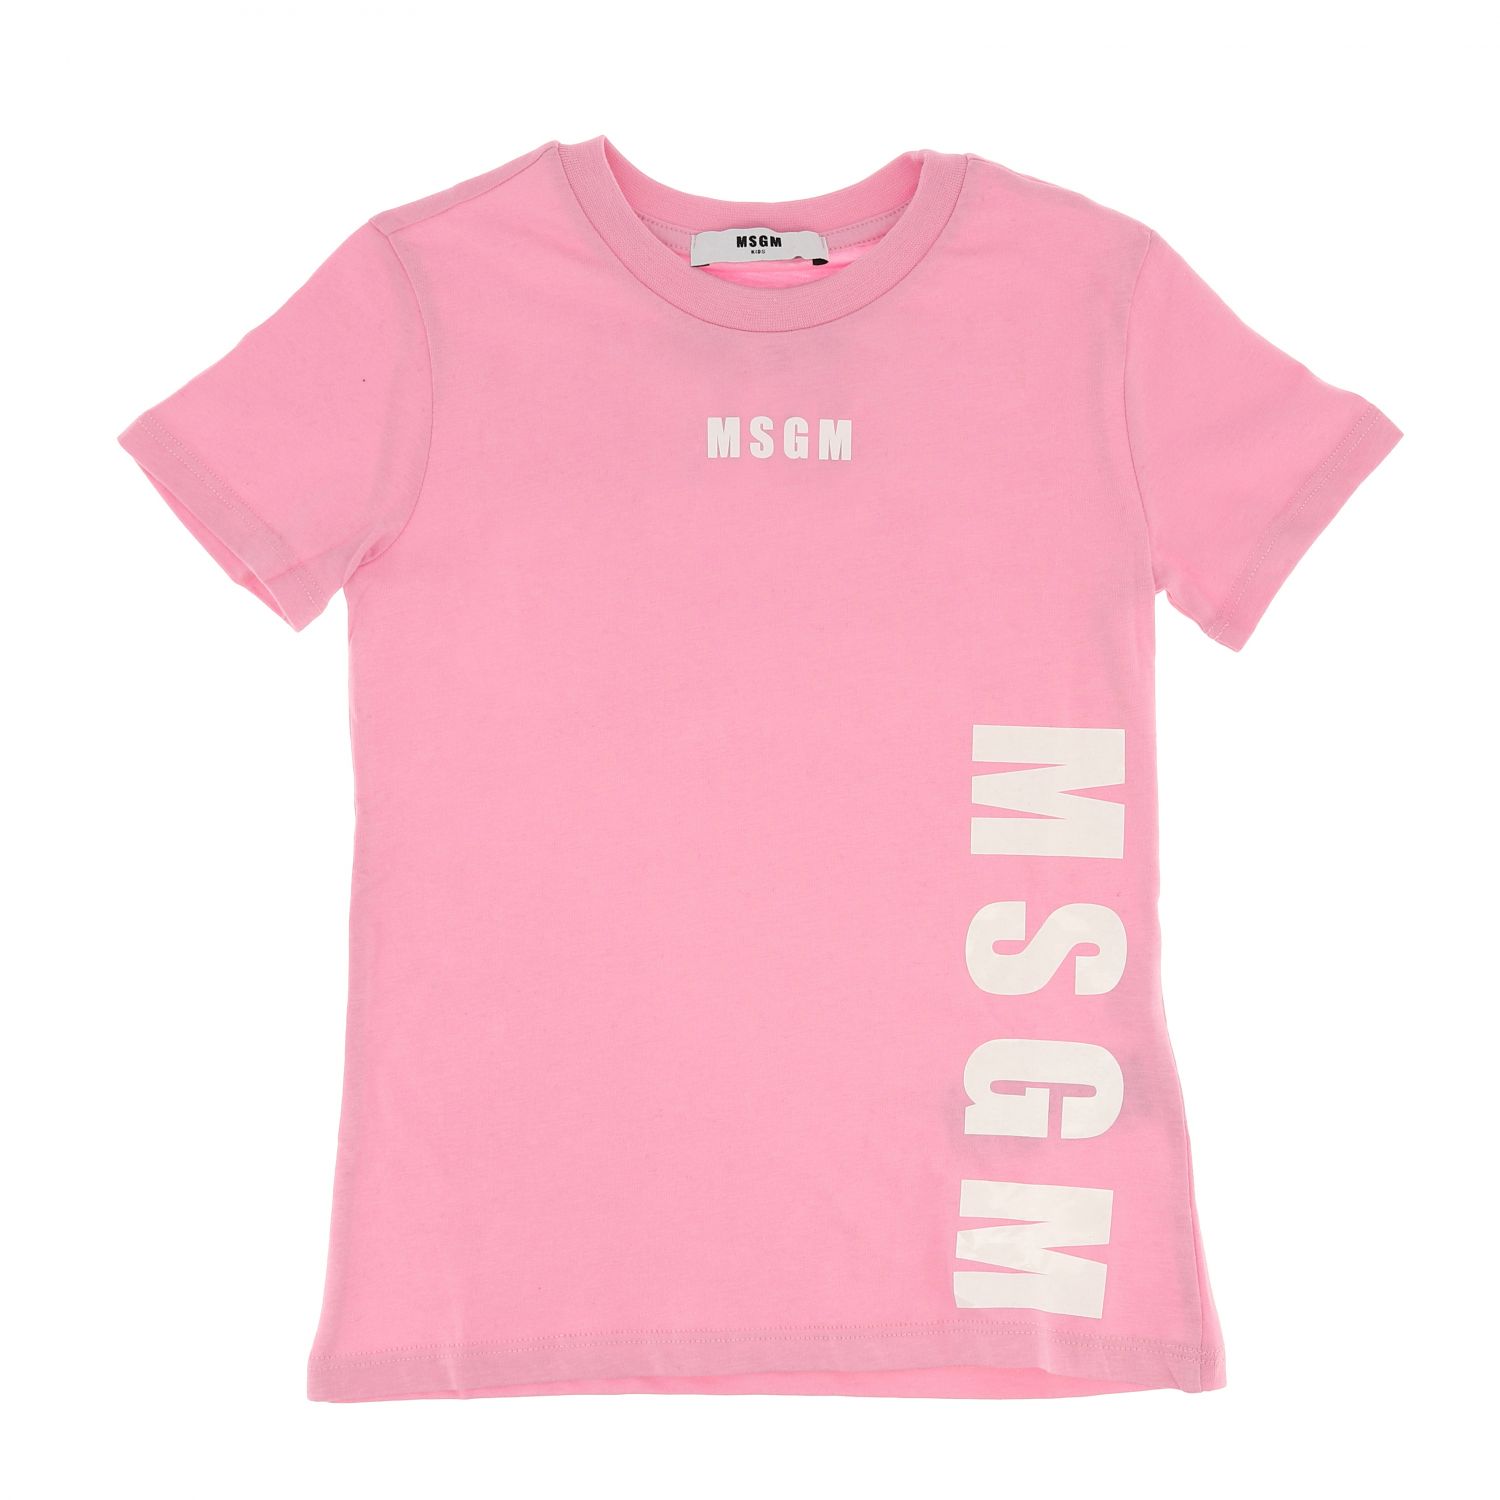 Msgm Kids Outlet: t-shirt for girls - Pink | Msgm Kids t-shirt 020296 ...